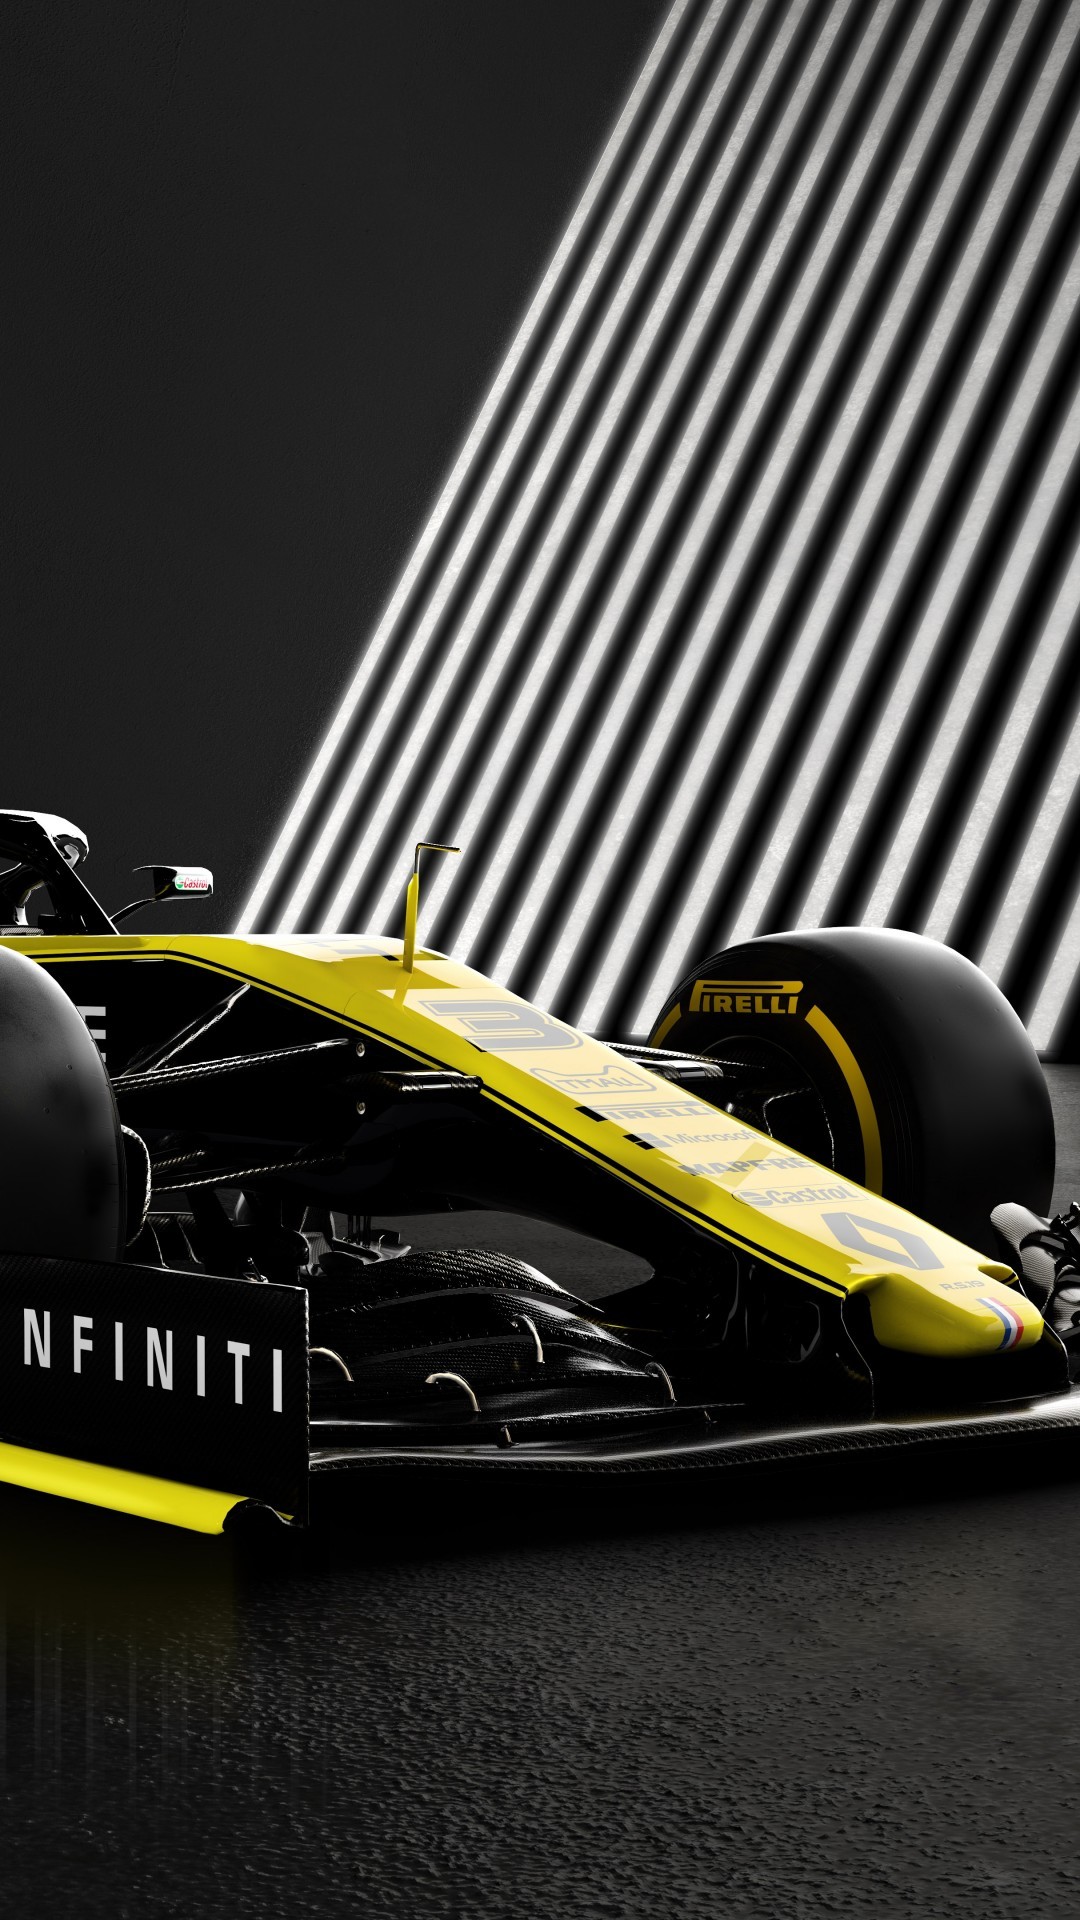 Formula Renault Rs19 Racing Cars Yellow